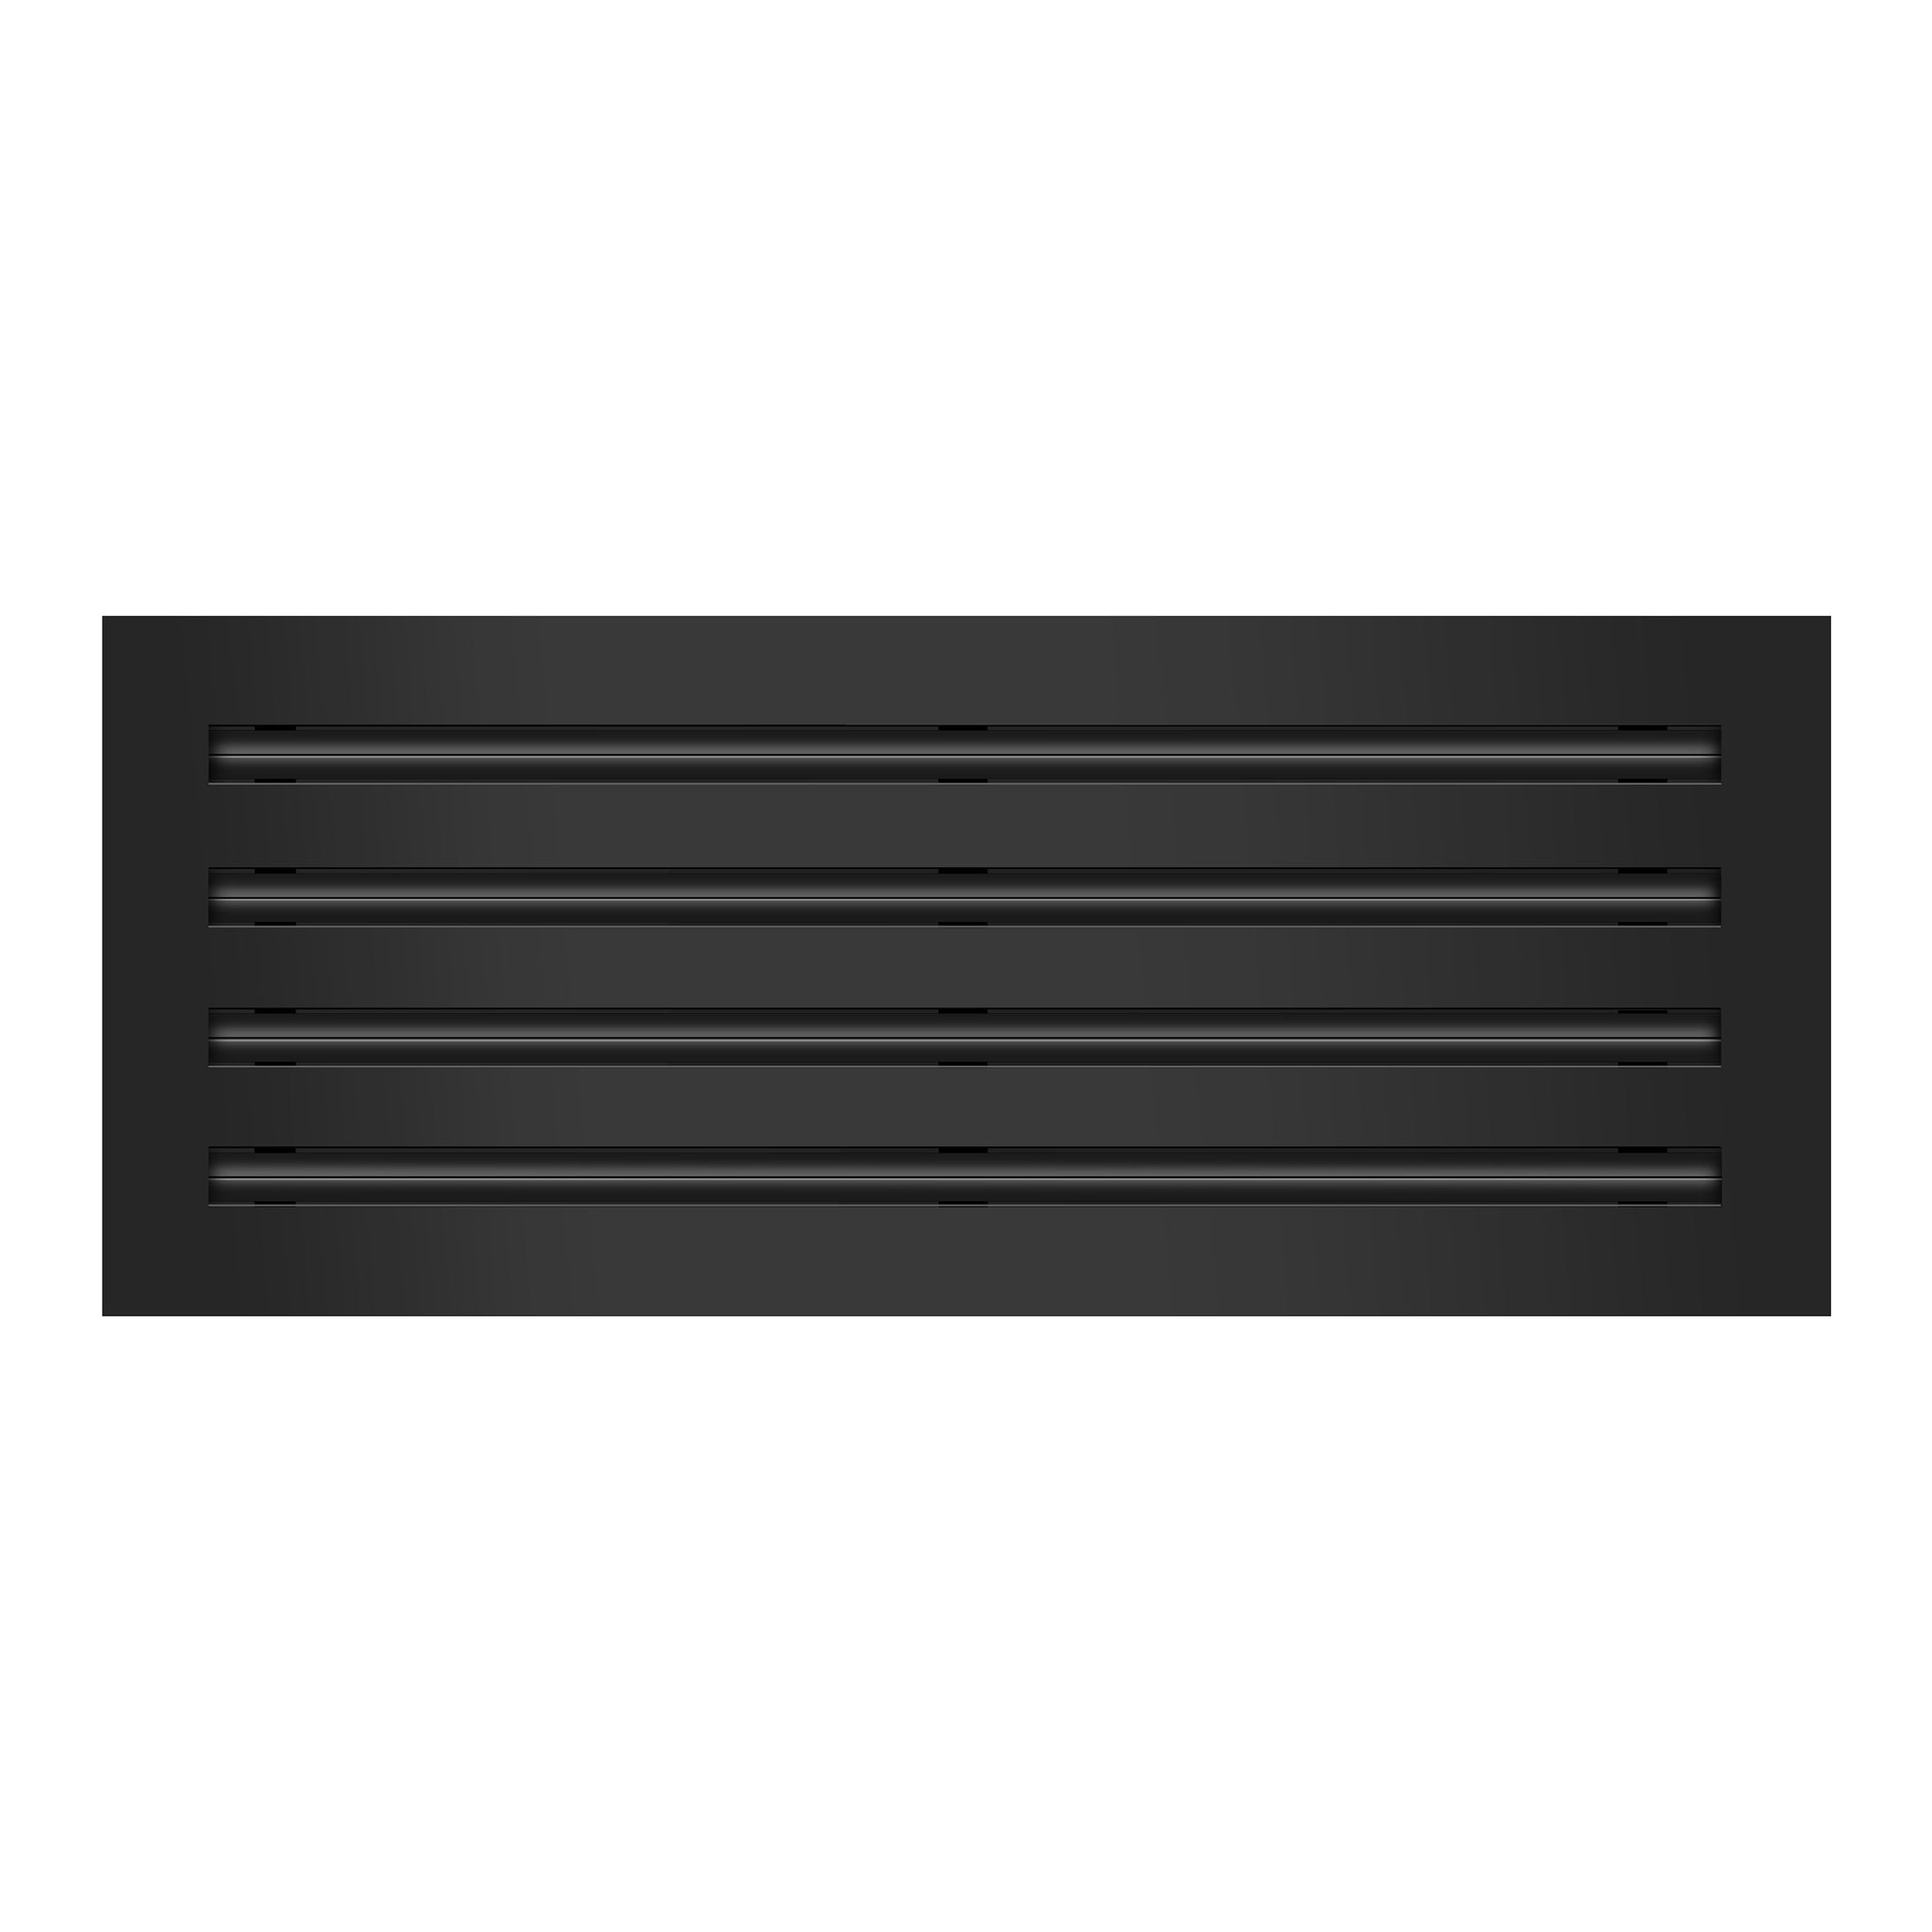 Front View of 20x8 Modern Air Vent Cover Black - 20x8 Standard Linear Slot Diffuser Black - Texas Buildmart